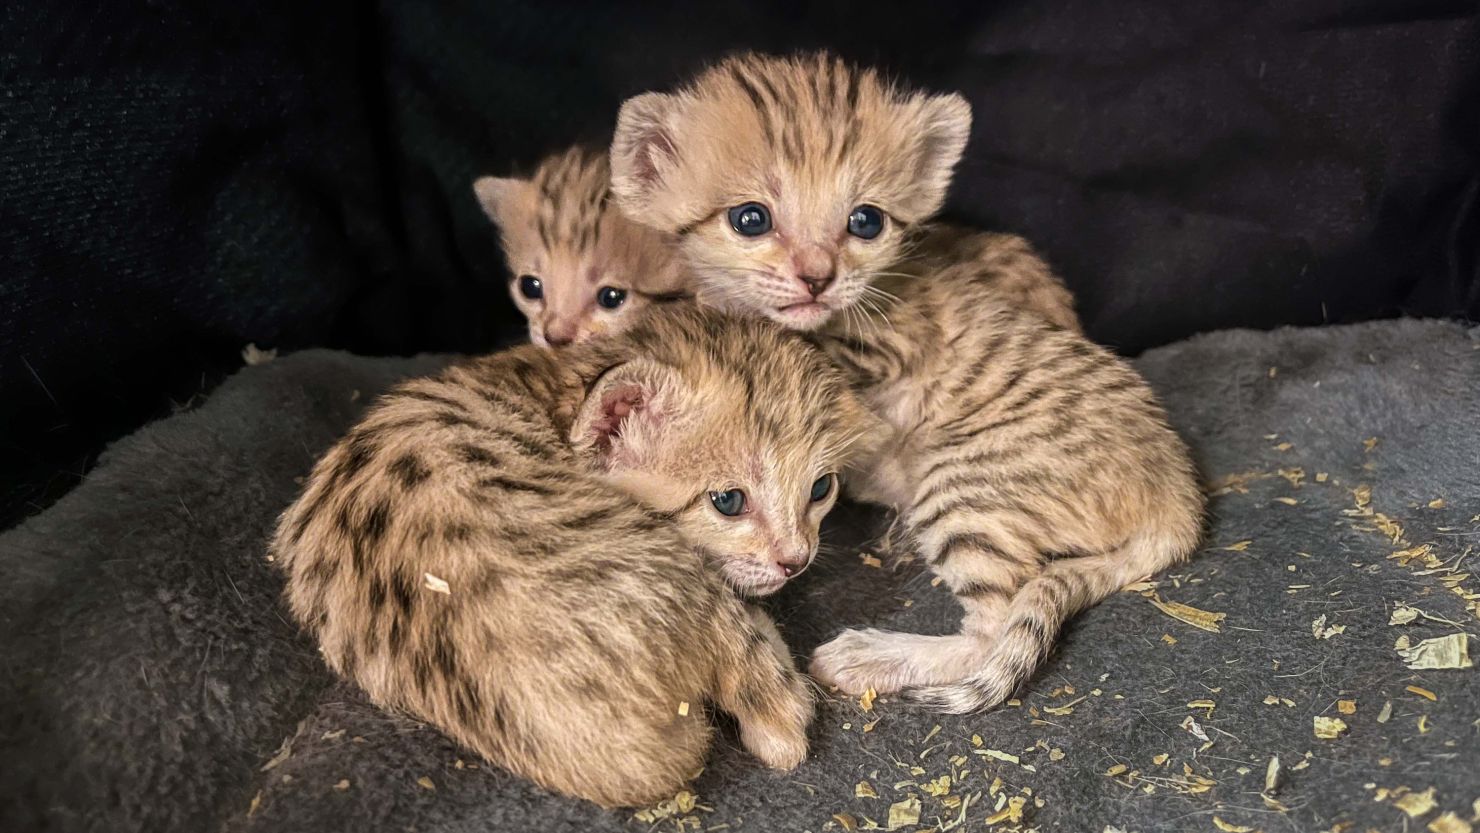 The North Carolina Zoo announced three sand cat kittens were born on May 11.